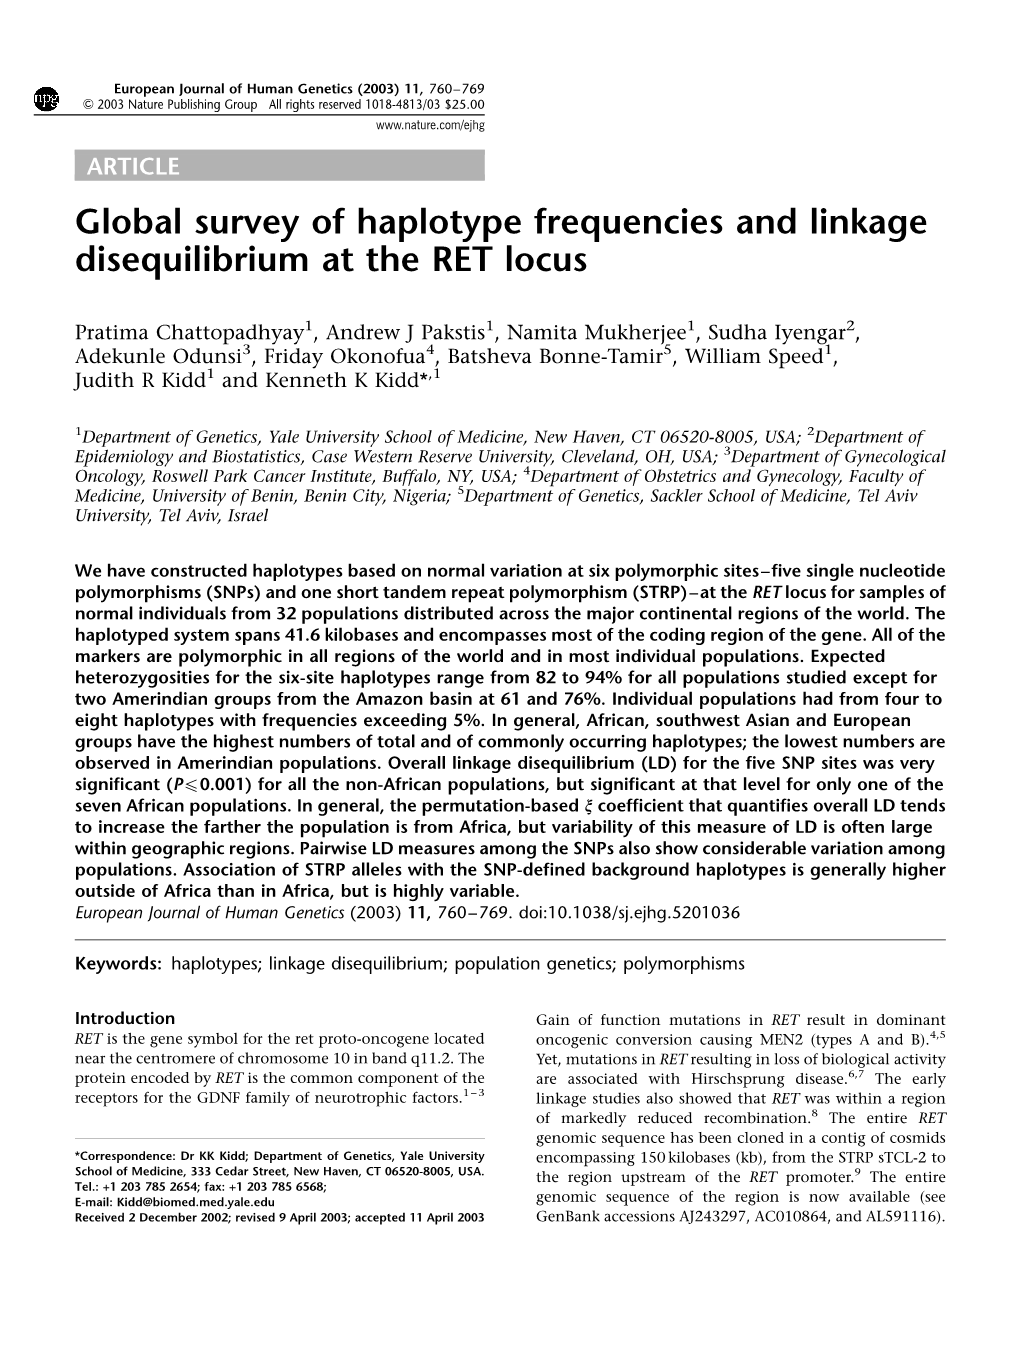 Global Survey of Haplotype Frequencies and Linkage Disequilibrium at the RET Locus